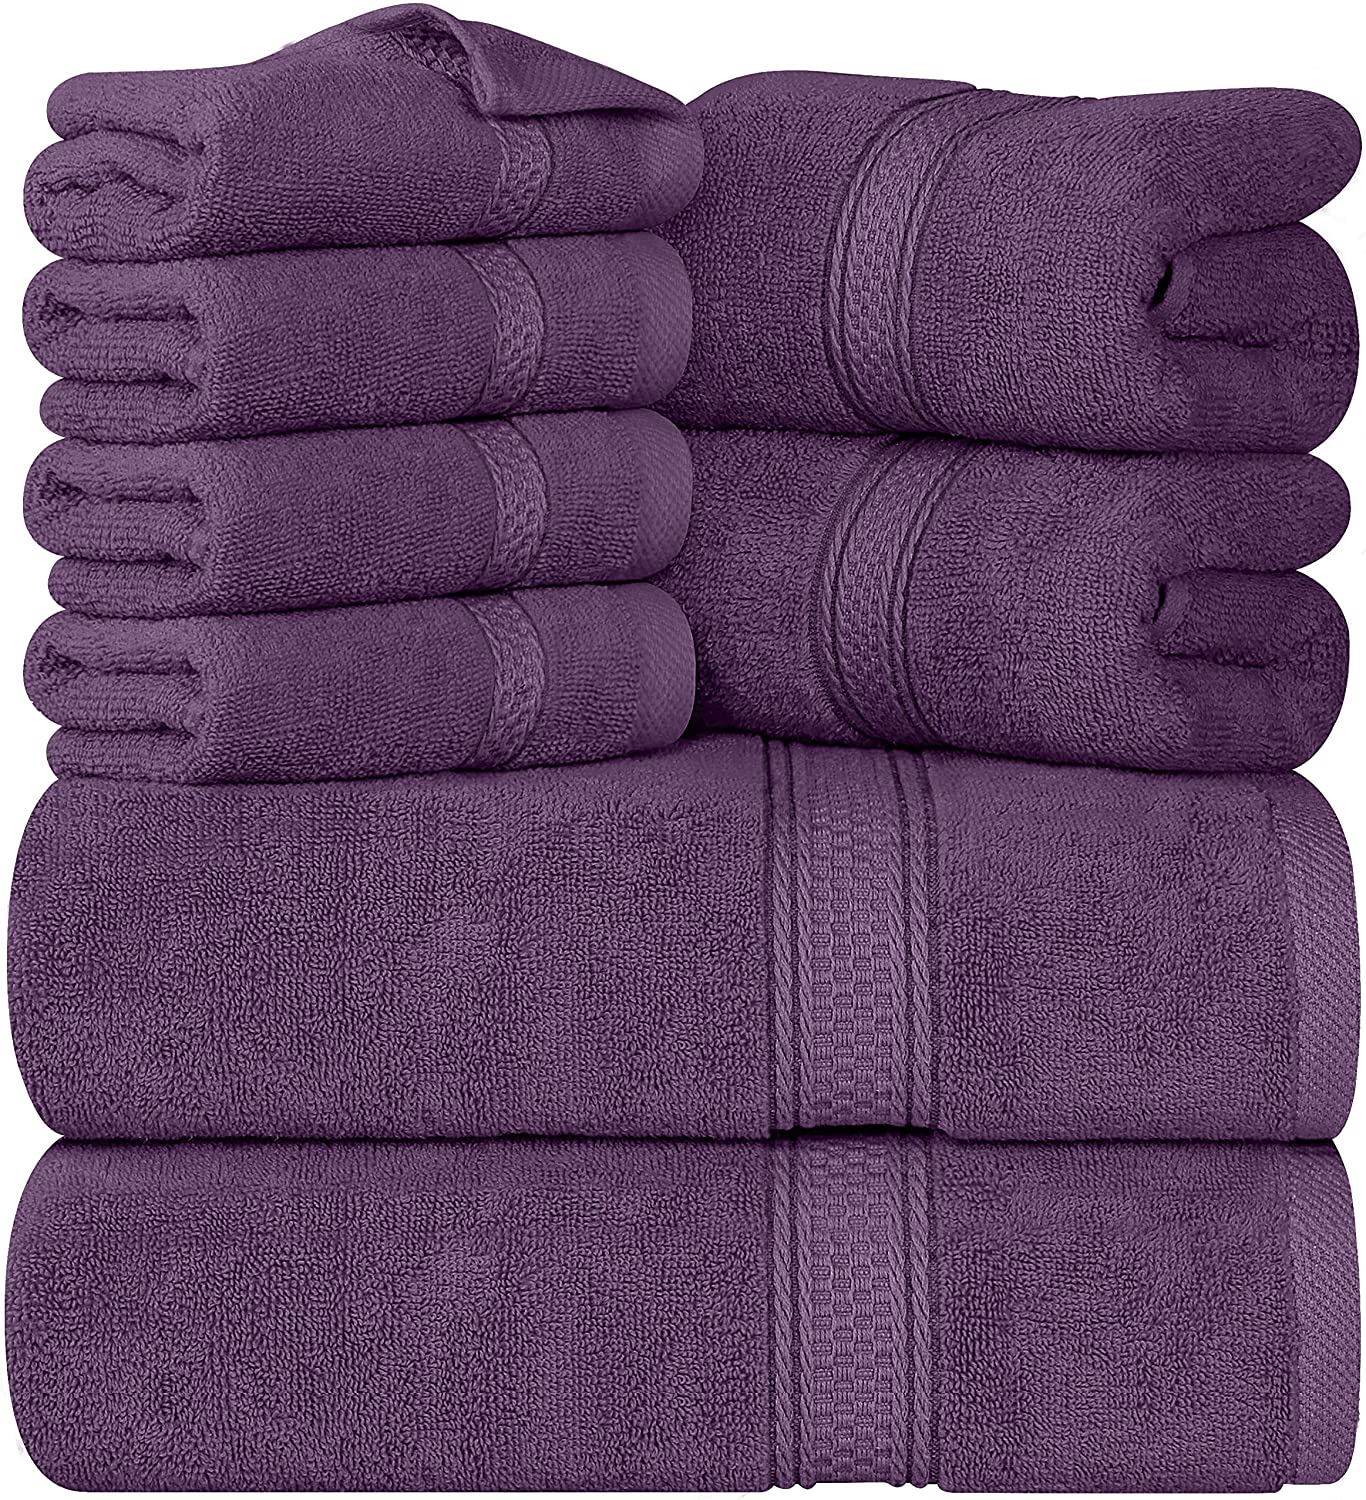 Utopia Towels 4 Bath Towels, 8 Washcloths and 4 Hand Towels